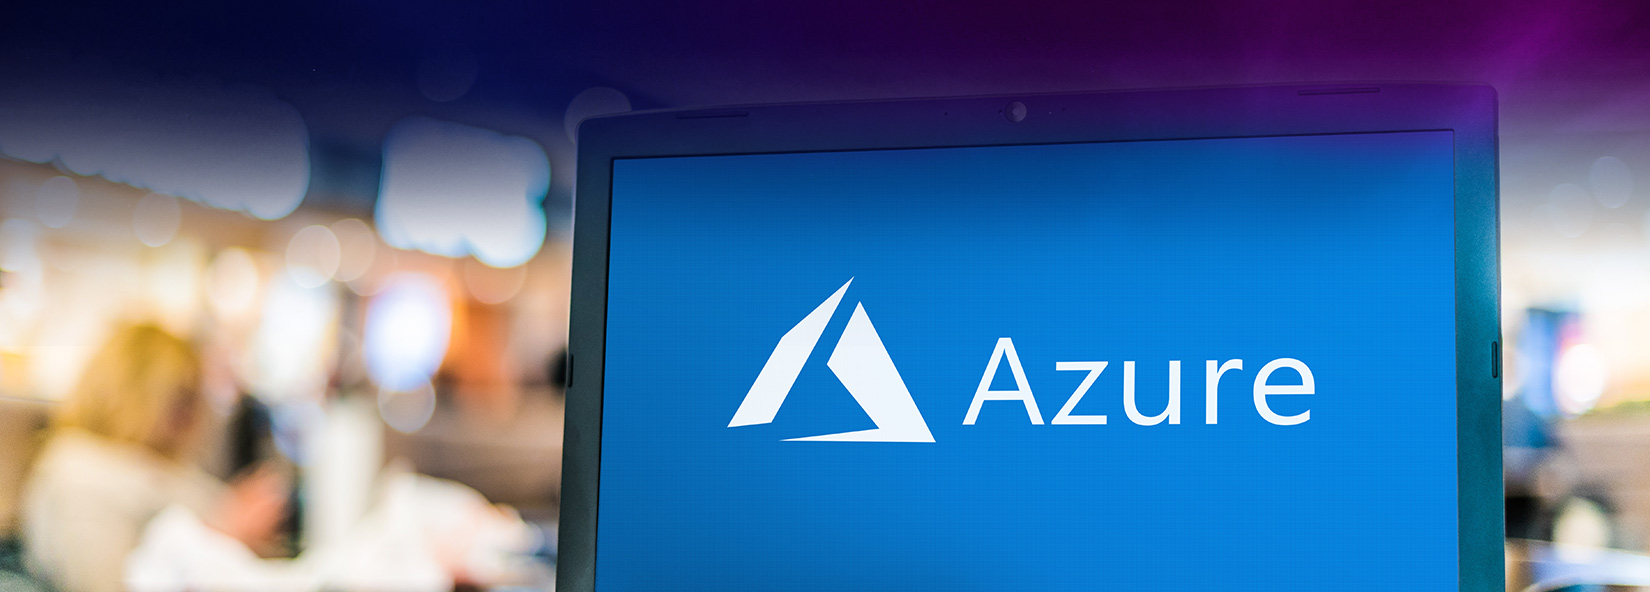 Azure application services